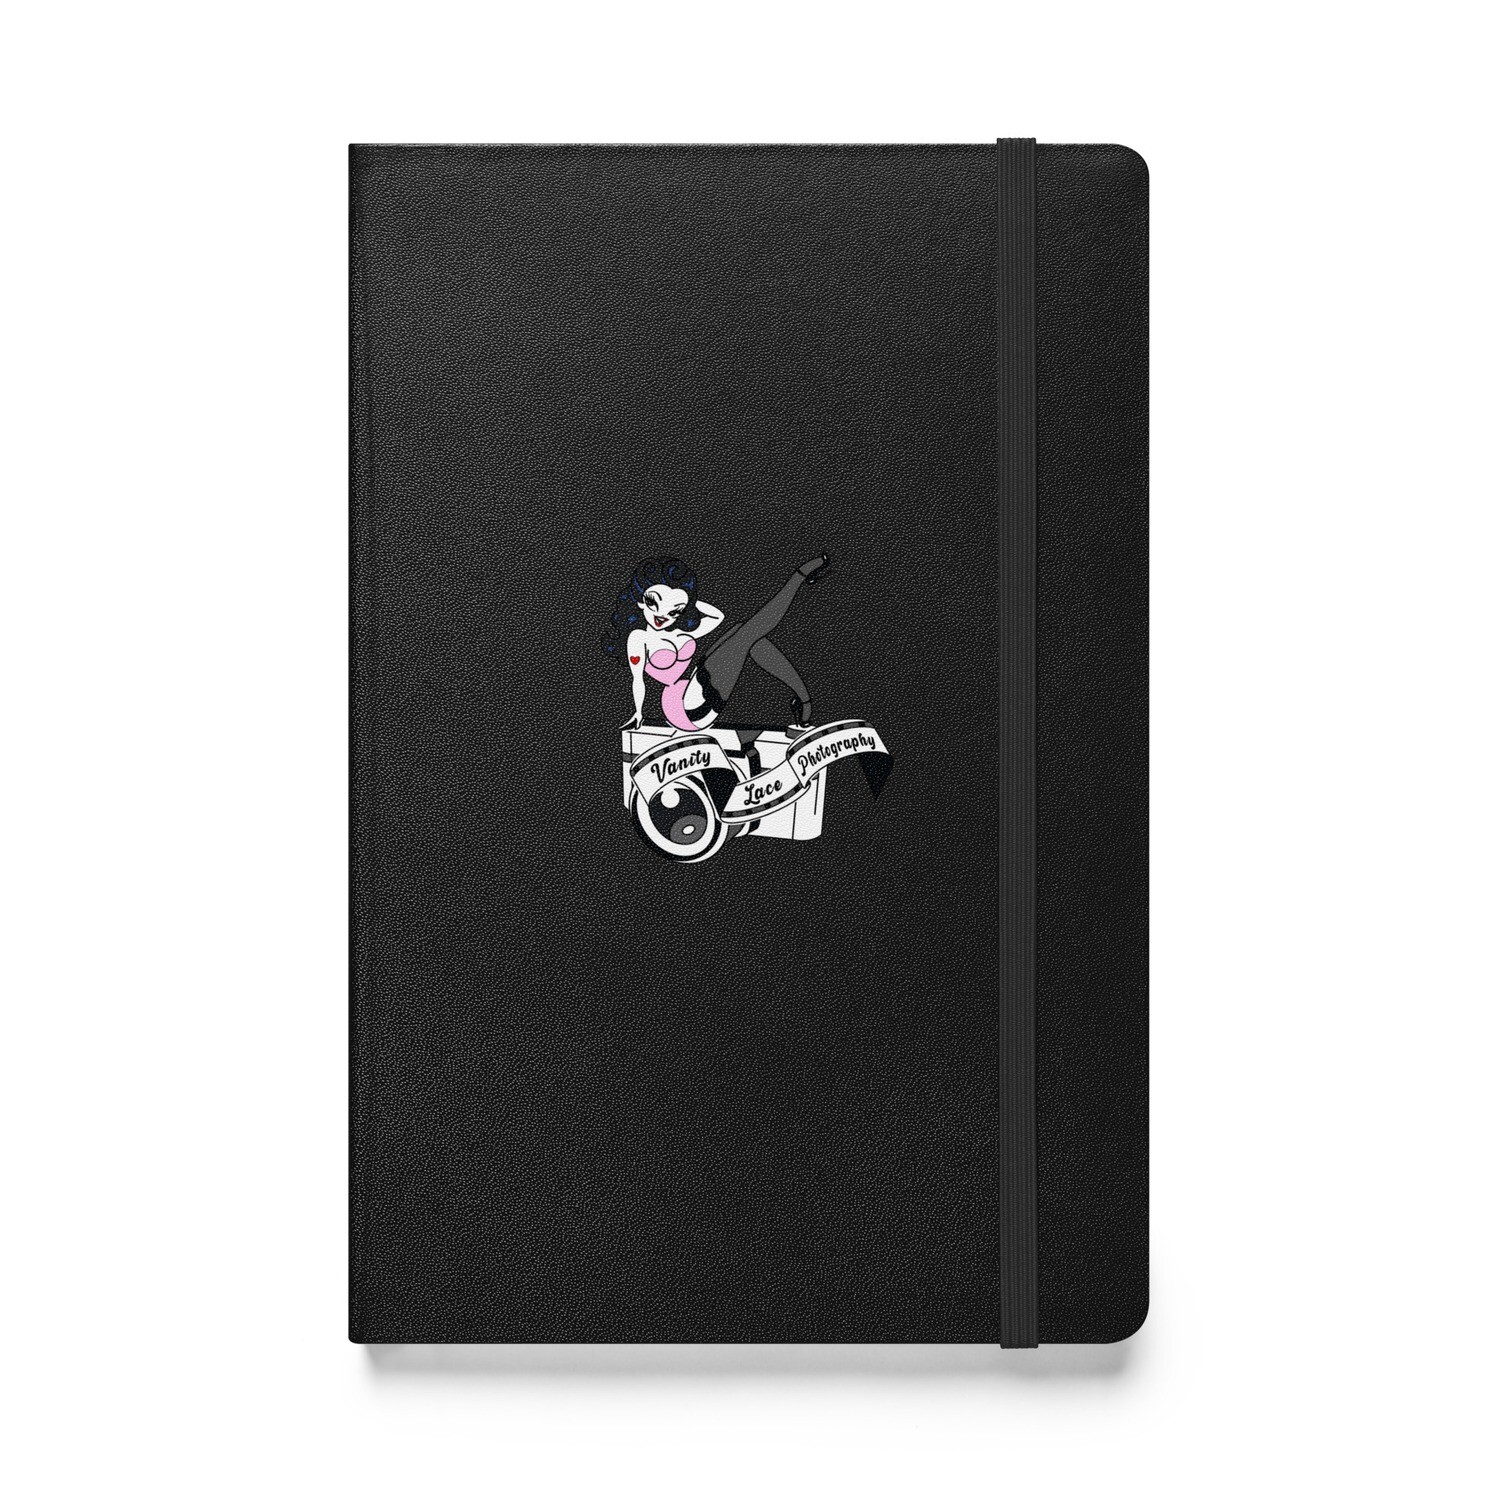 VLP - Hardcover bound notebook